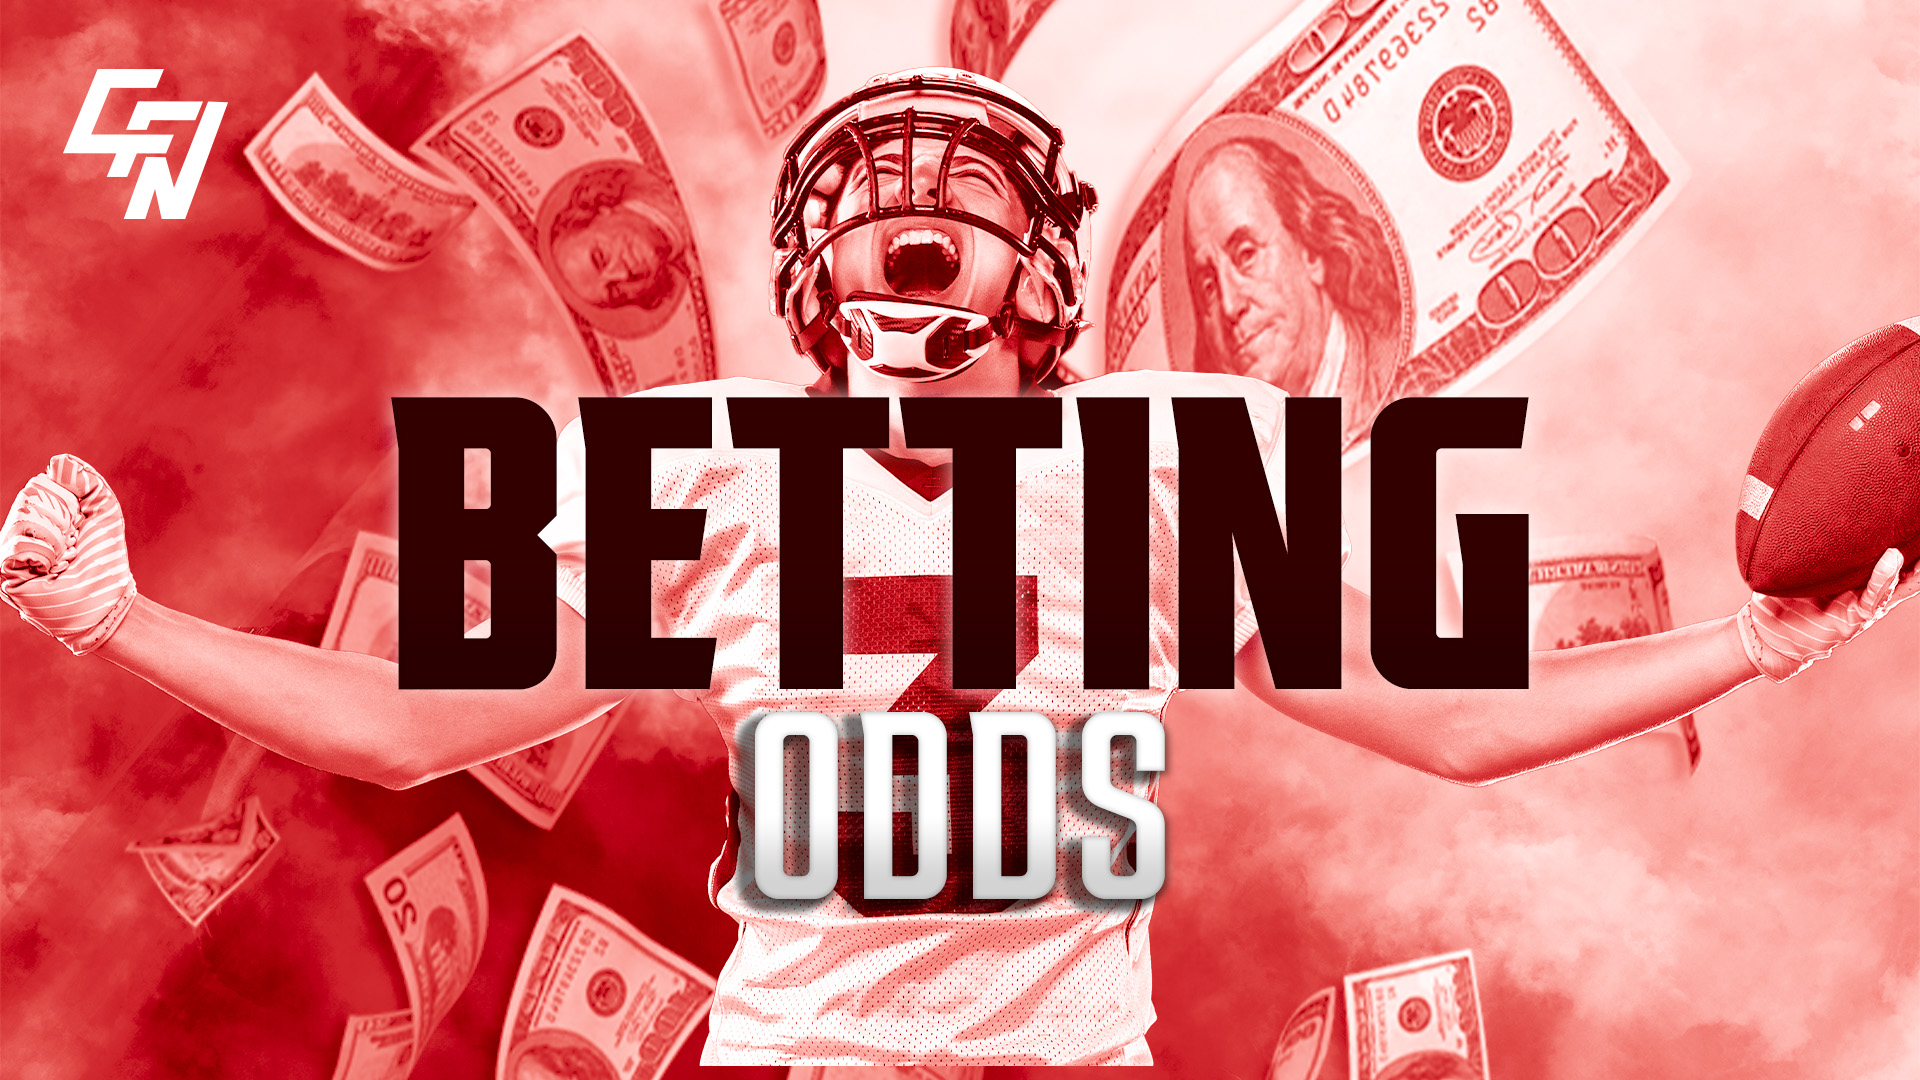 Football, Football odds, Football betting